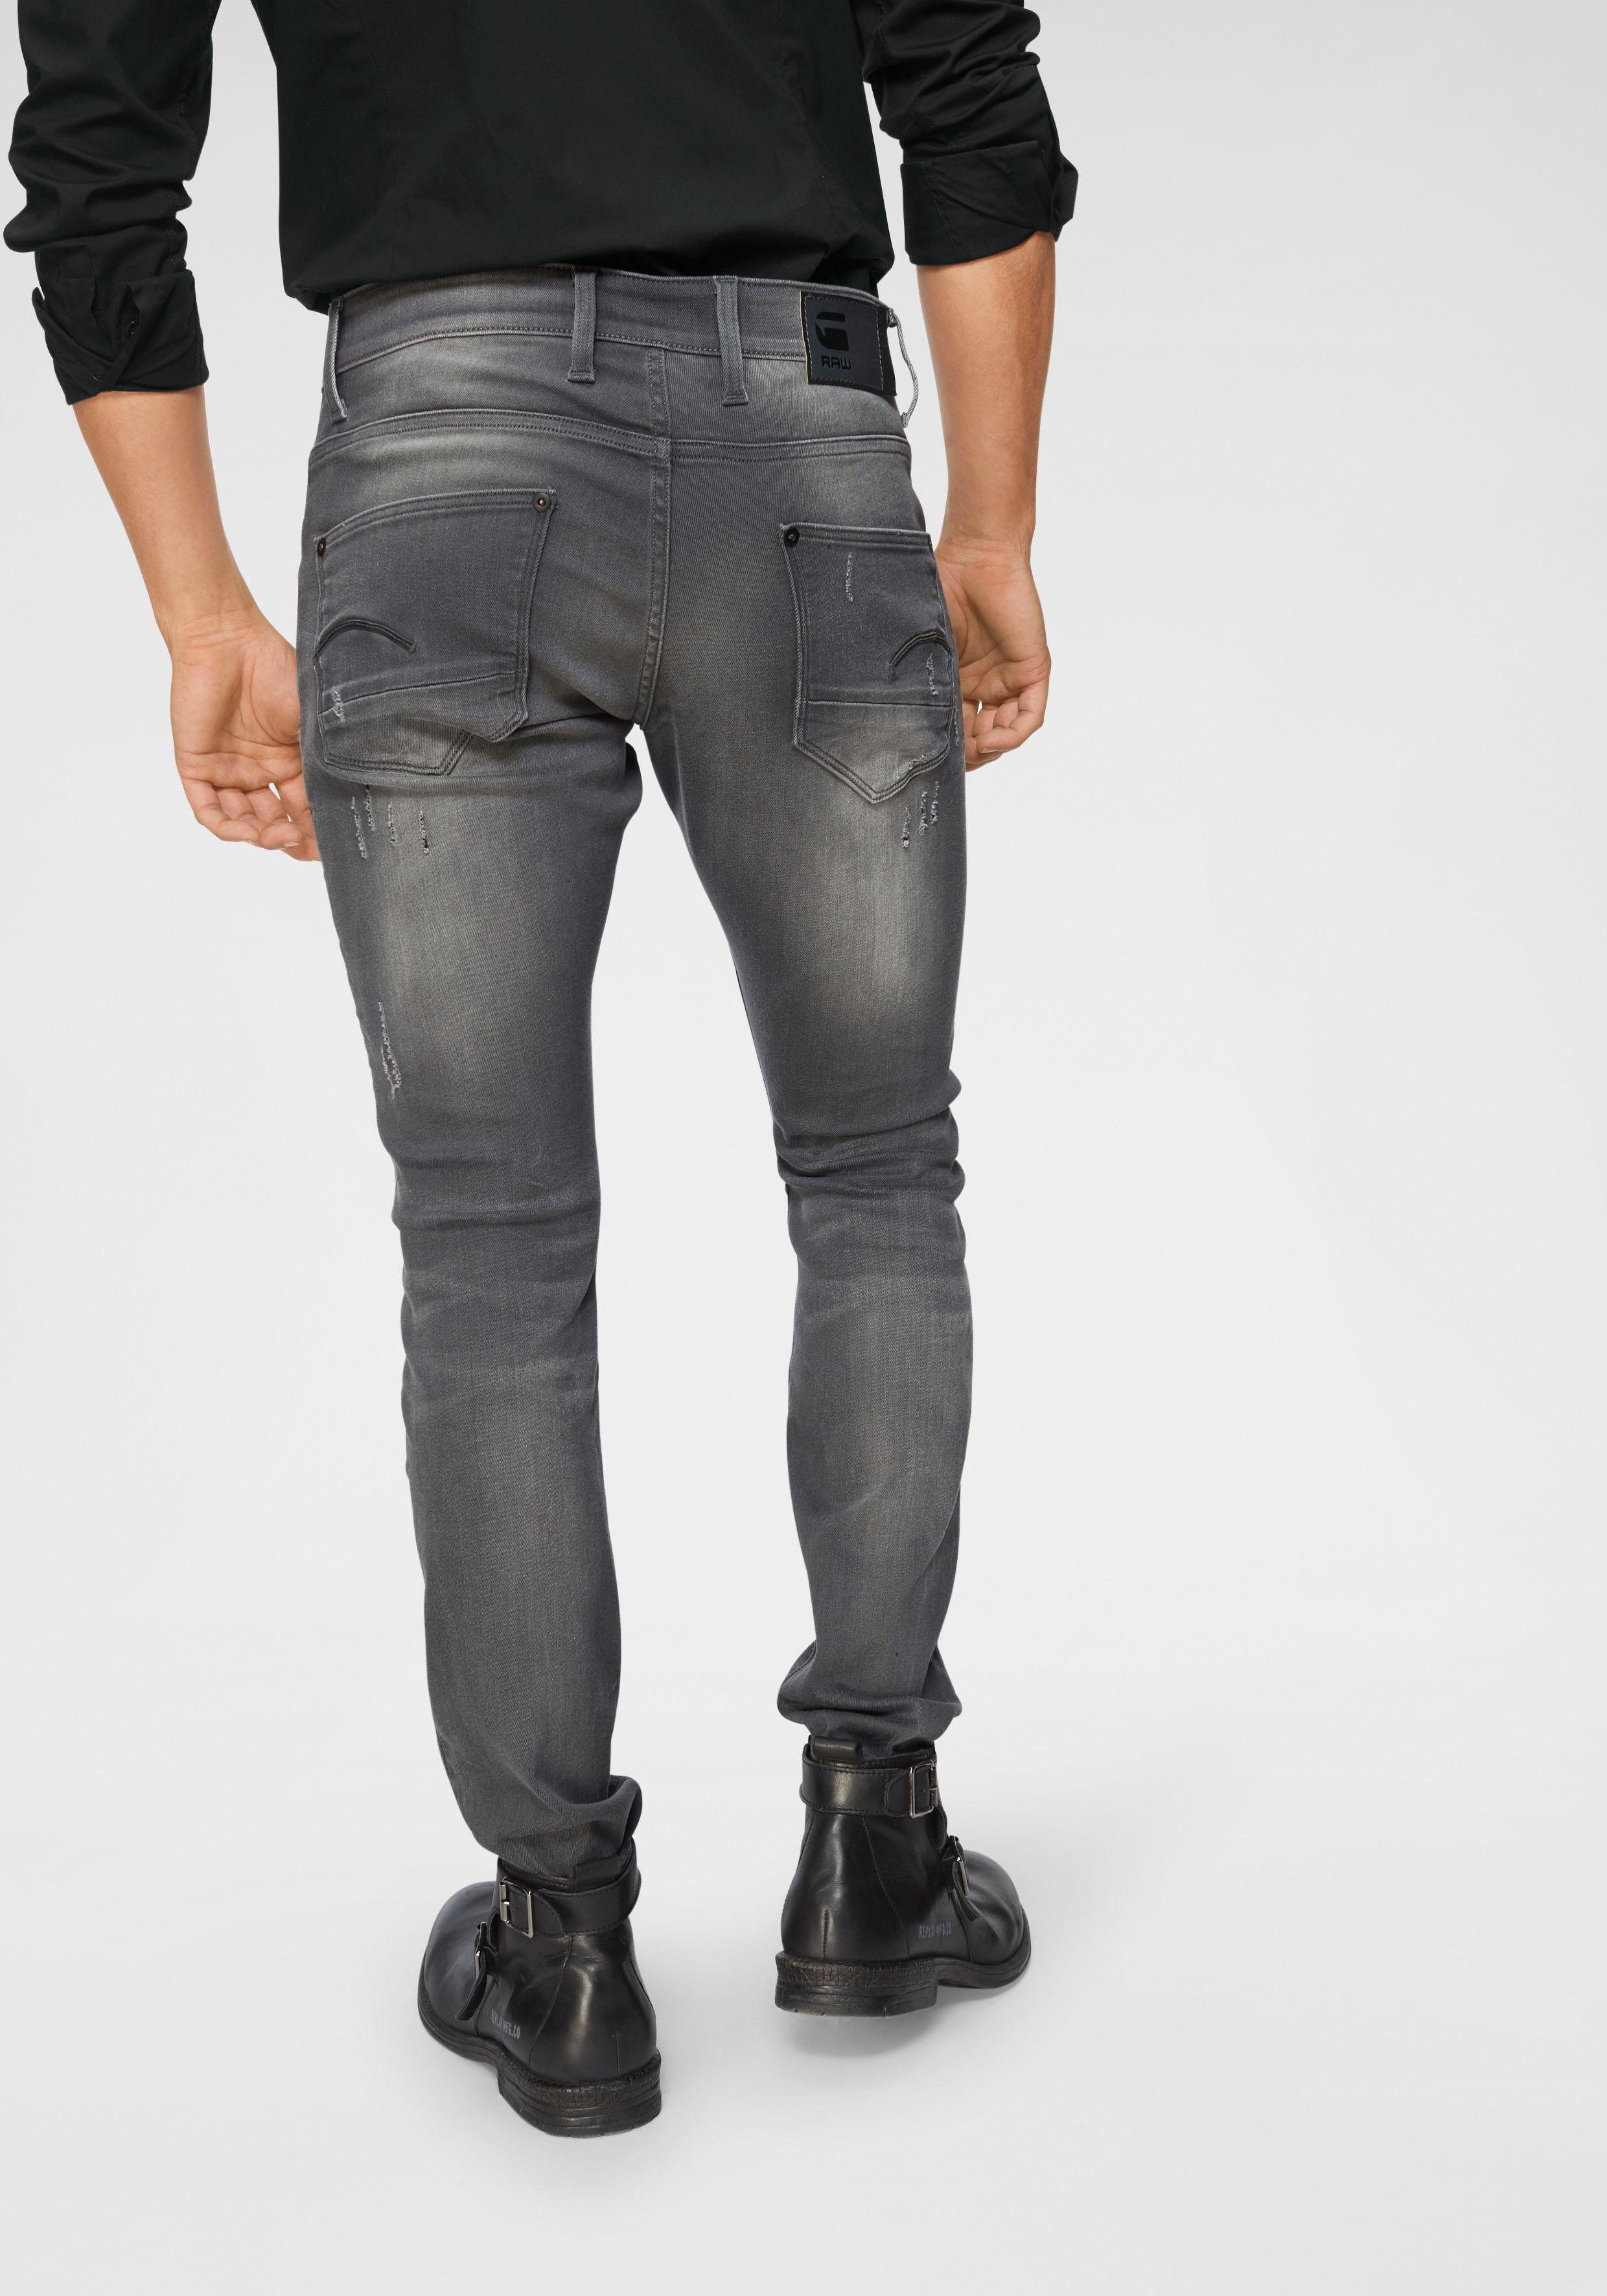 Bliksem ondeugd jas G-Star RAW Slim fit jeans Skinny online shoppen | OTTO